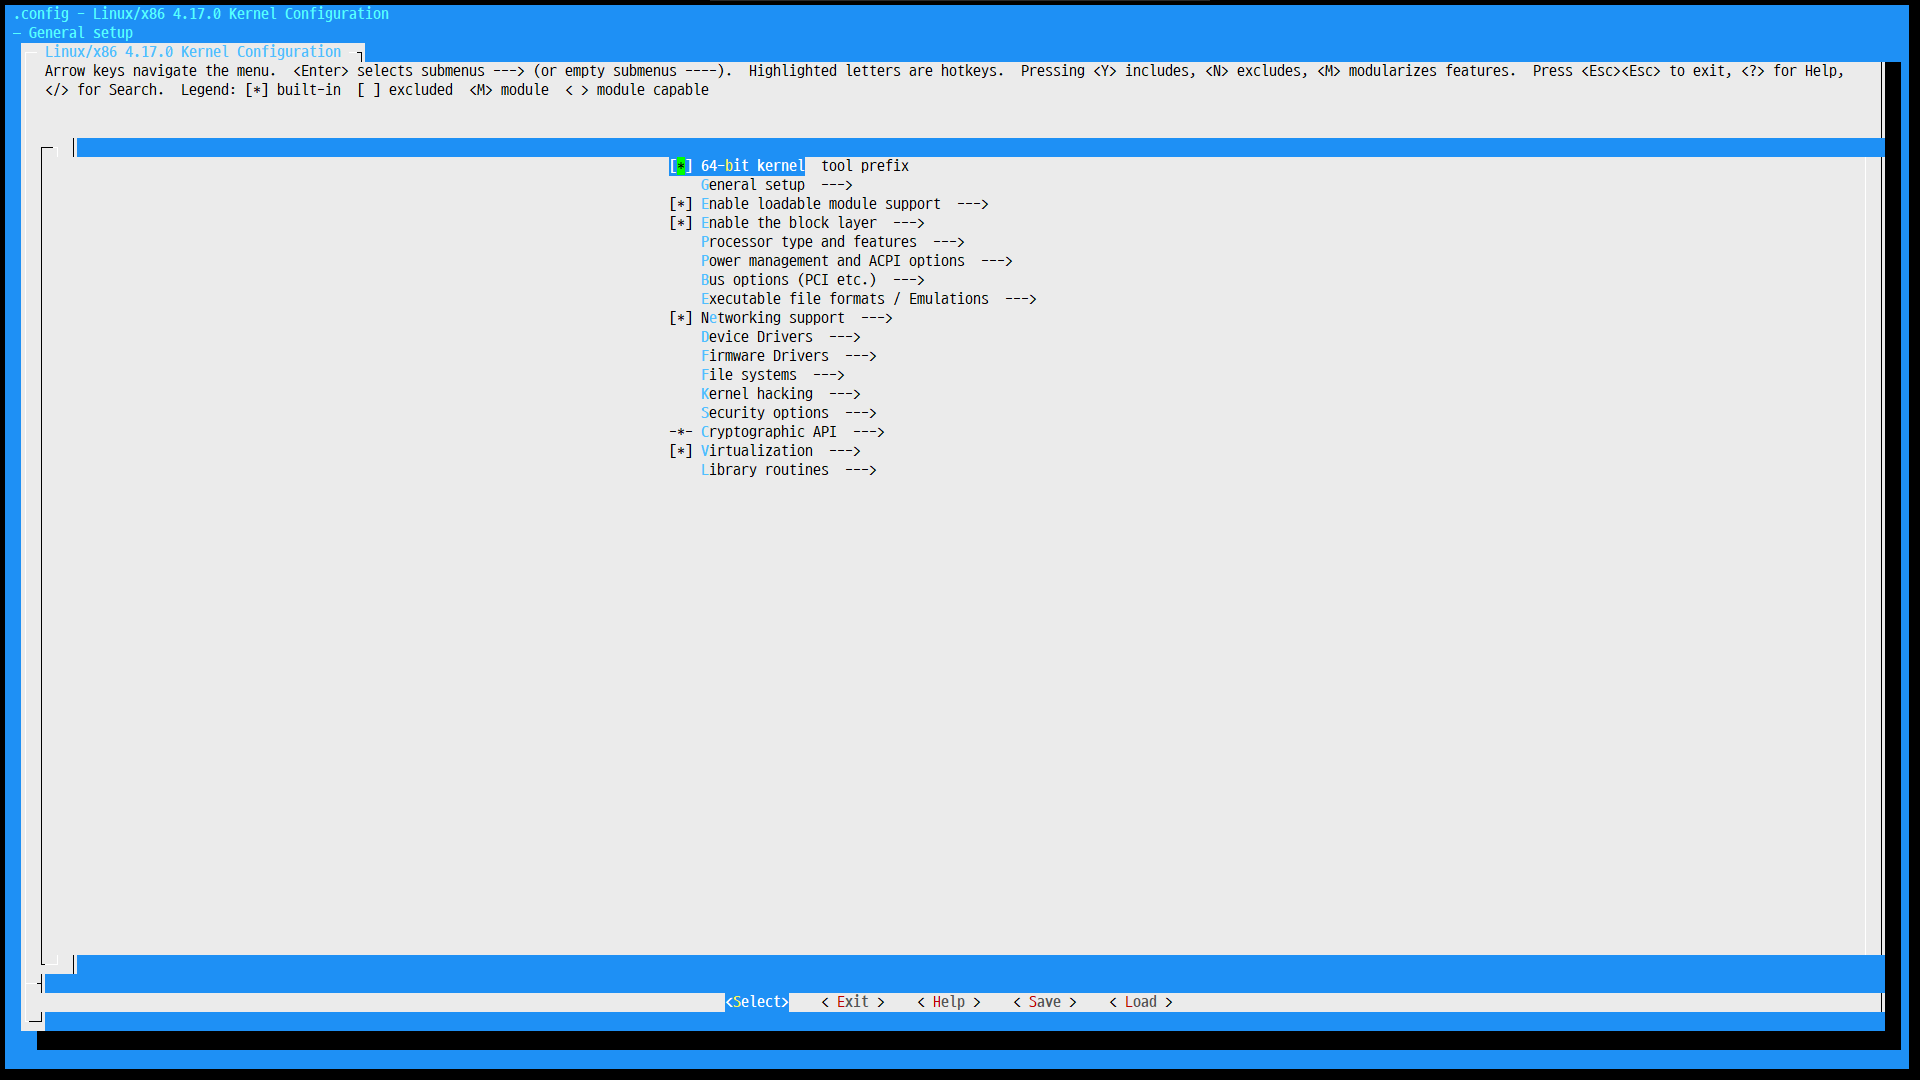 plik startowy jądra Linux x86 ro rootfs